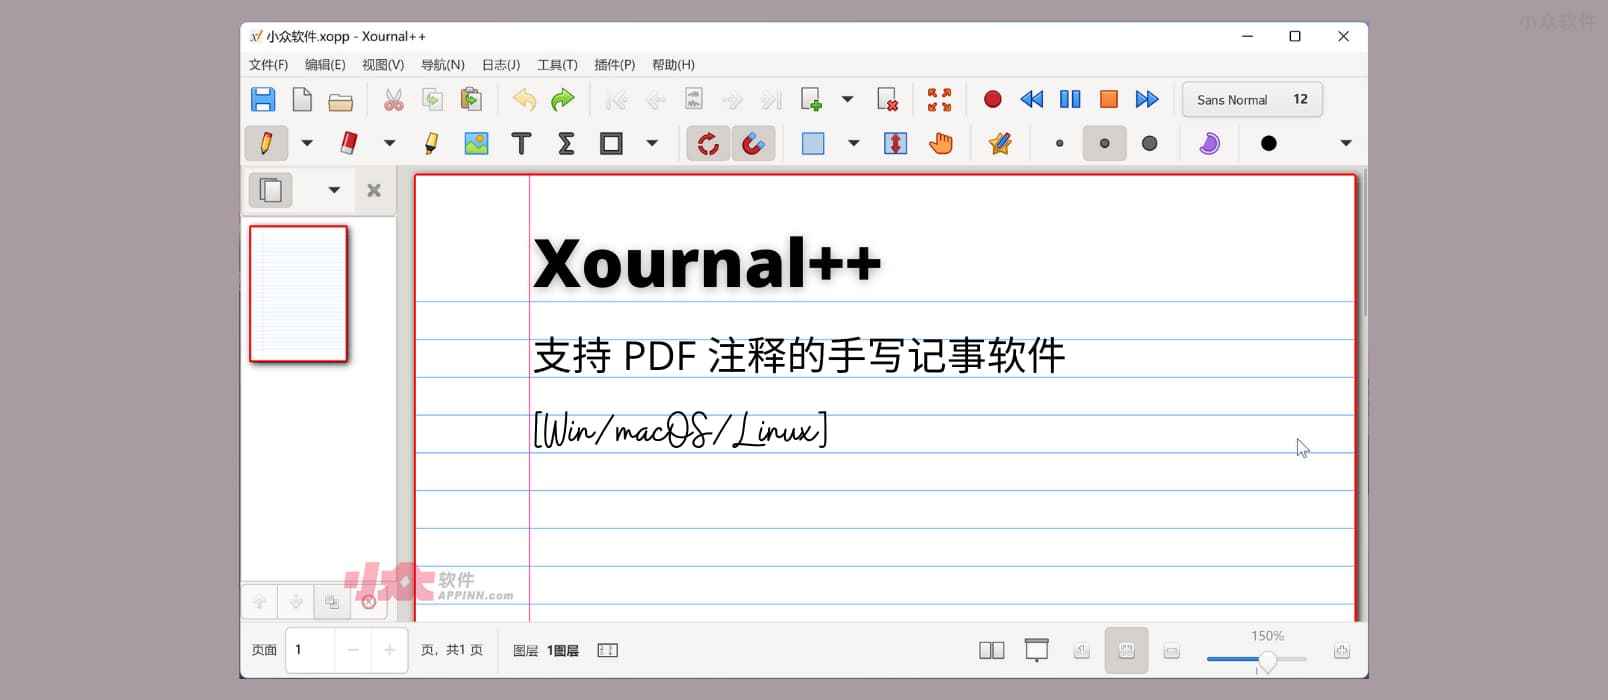 Xournal++ – 支持 PDF 注释的手写记事软件[Win/macOS/Linux]